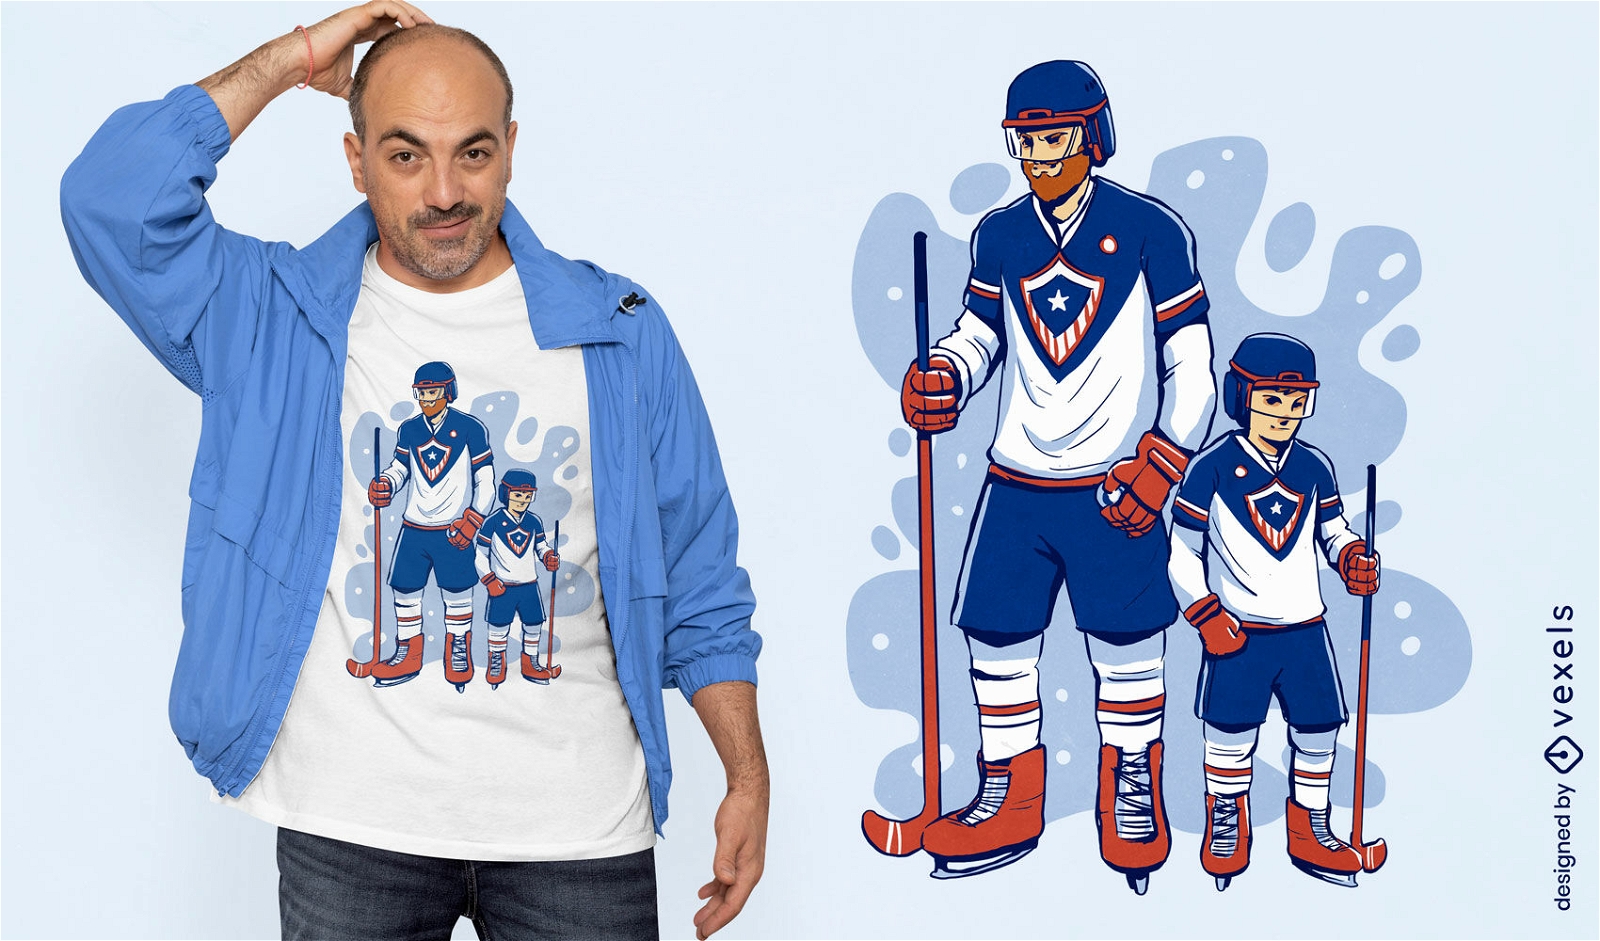 Dise?o de camiseta de padre de jugador de hockey.